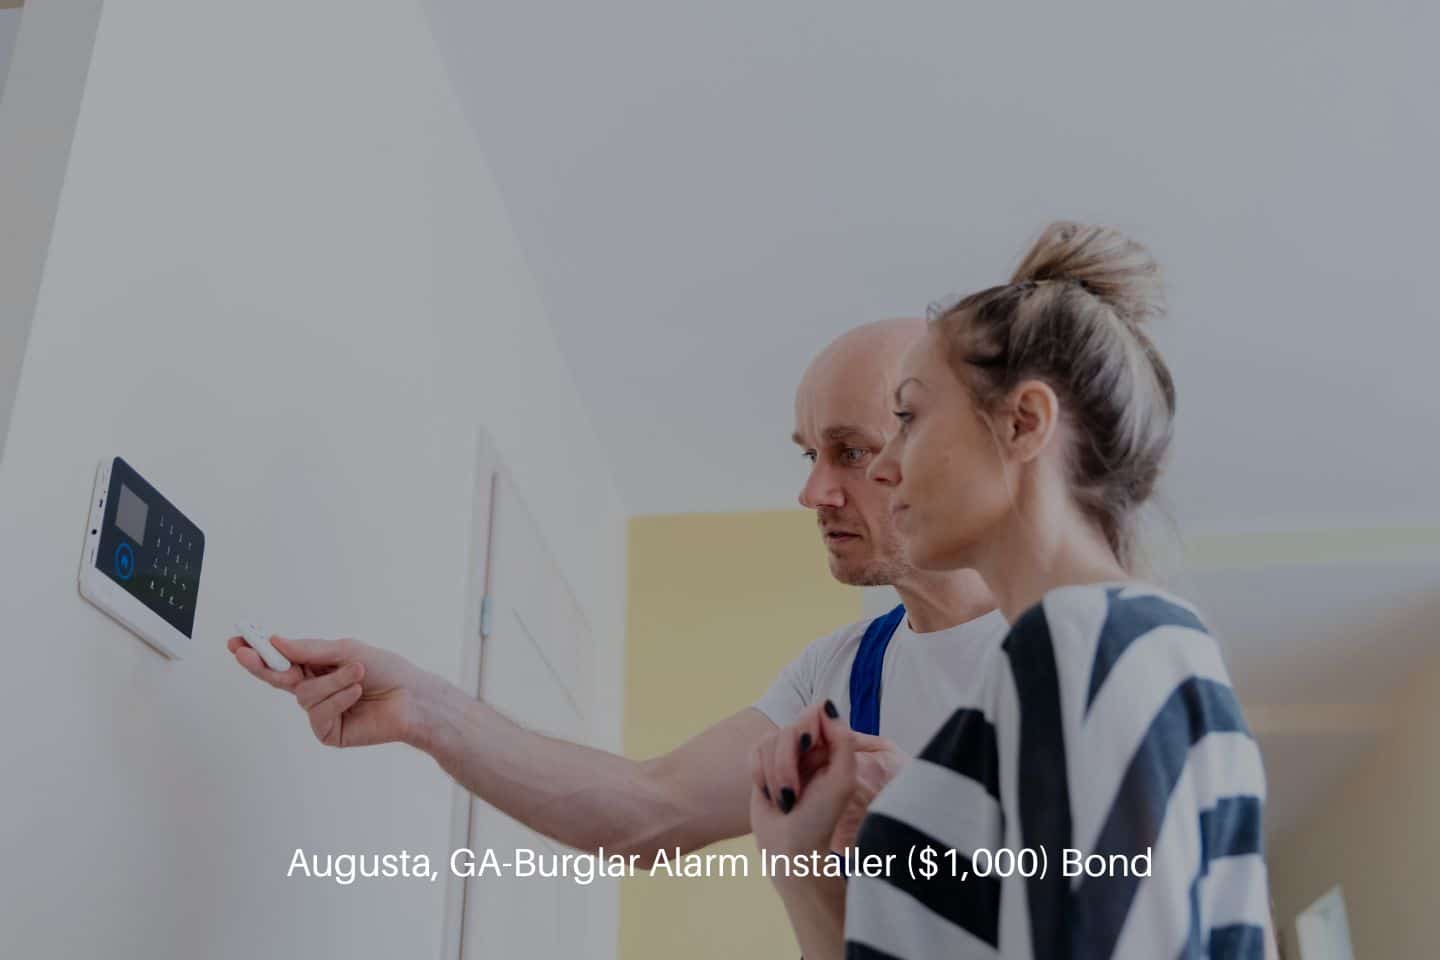 Augusta, GA-Burglar Alarm Installer ($1,000) Bond - An alarm fitter installs an alarm at home. Protection against burglars.